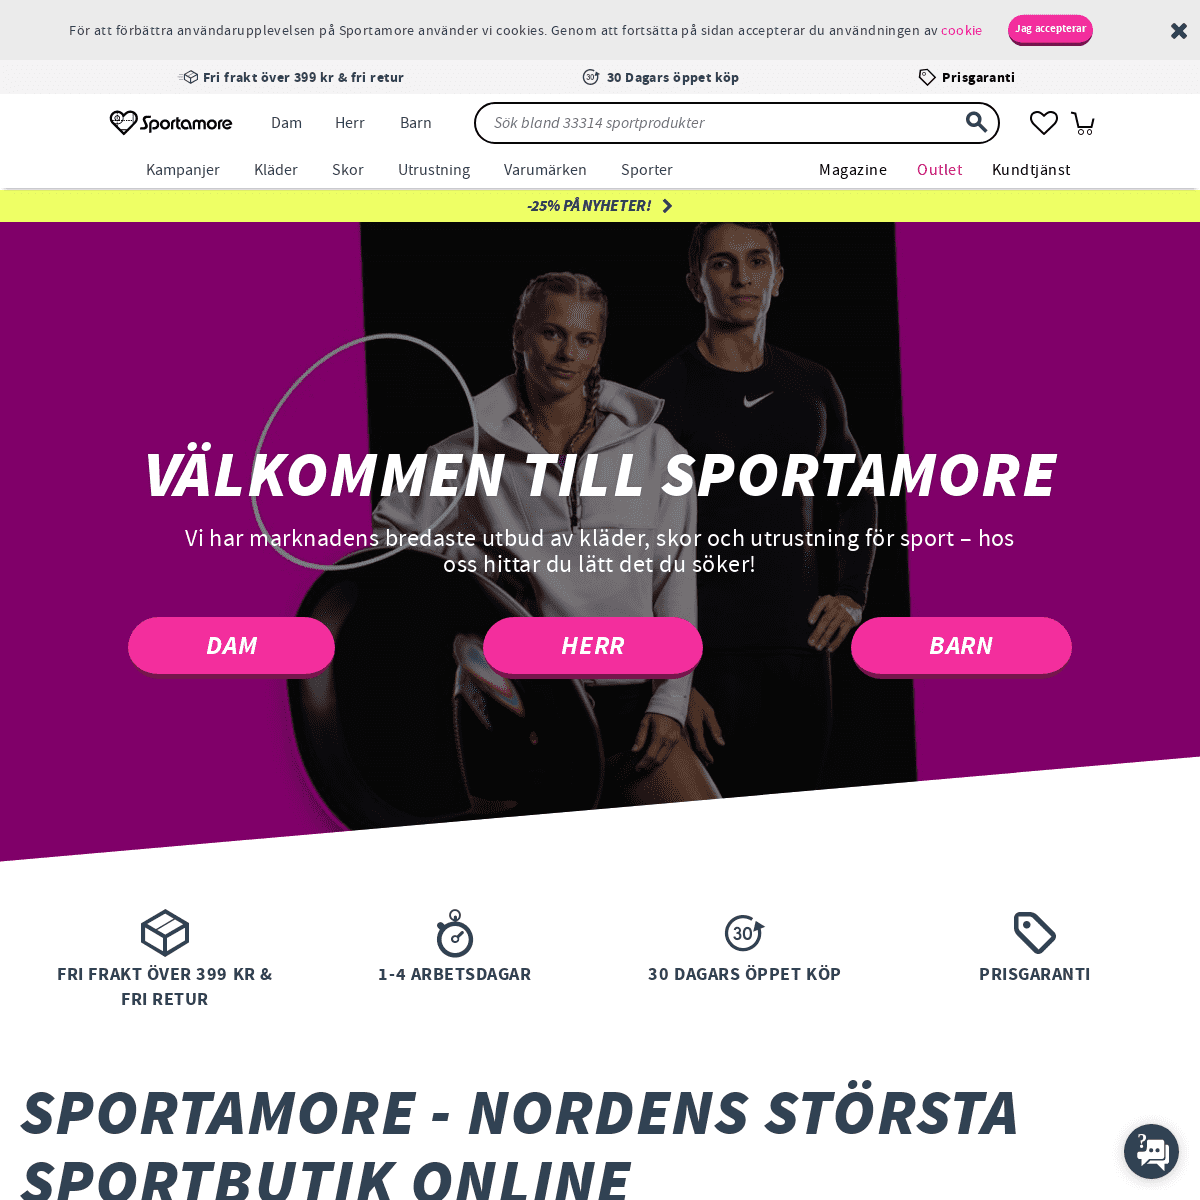 A complete backup of sportamore.se